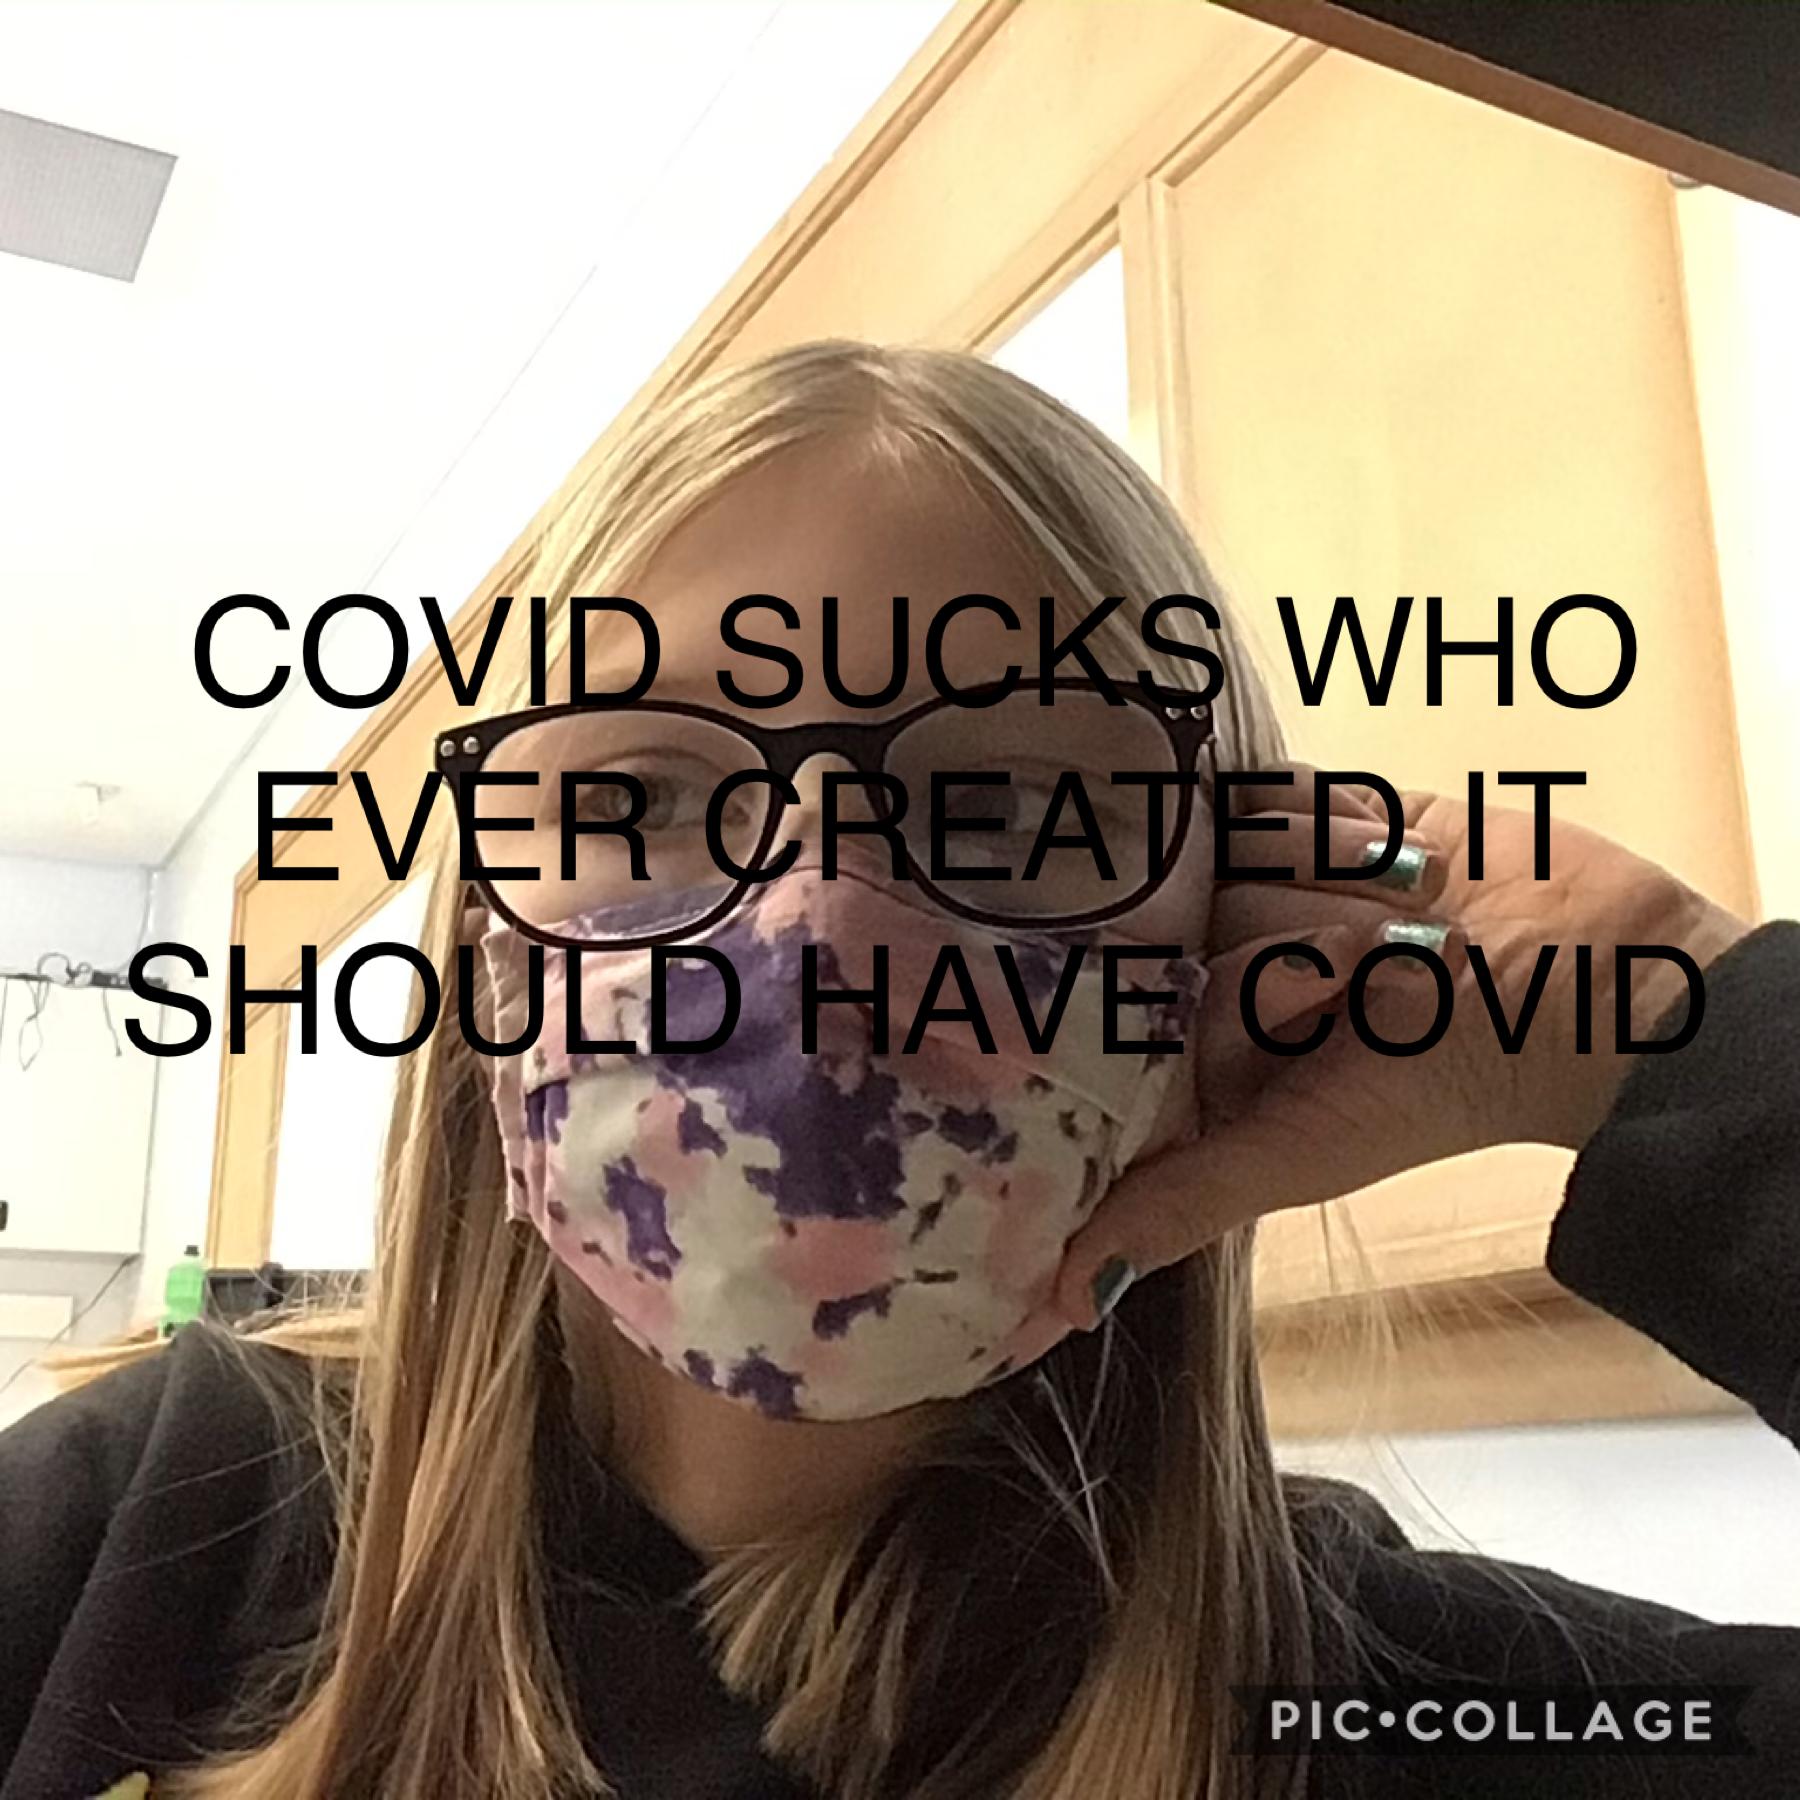 Covid sucks it ruins your life